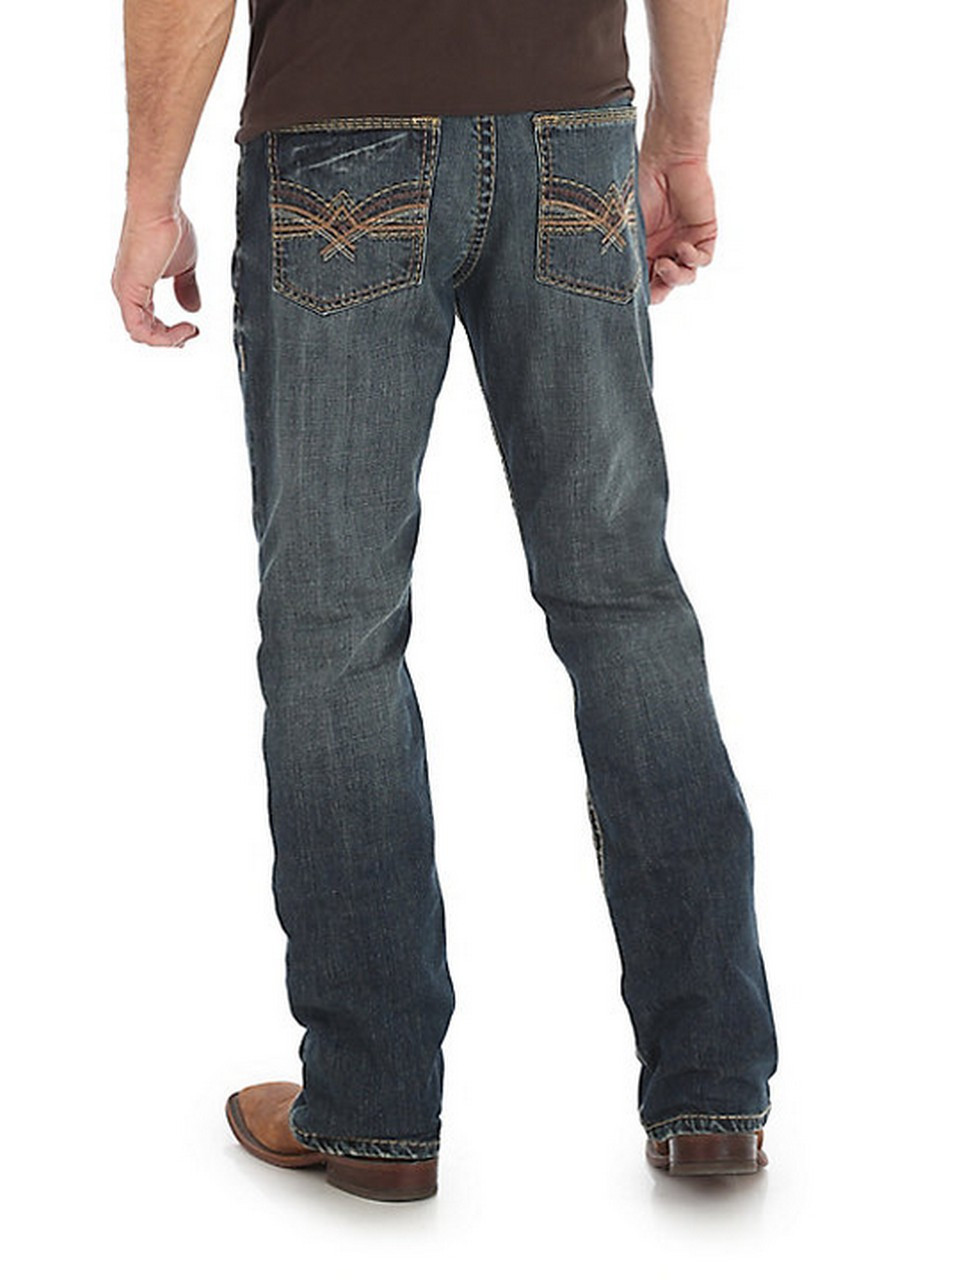 rock wrangler jeans